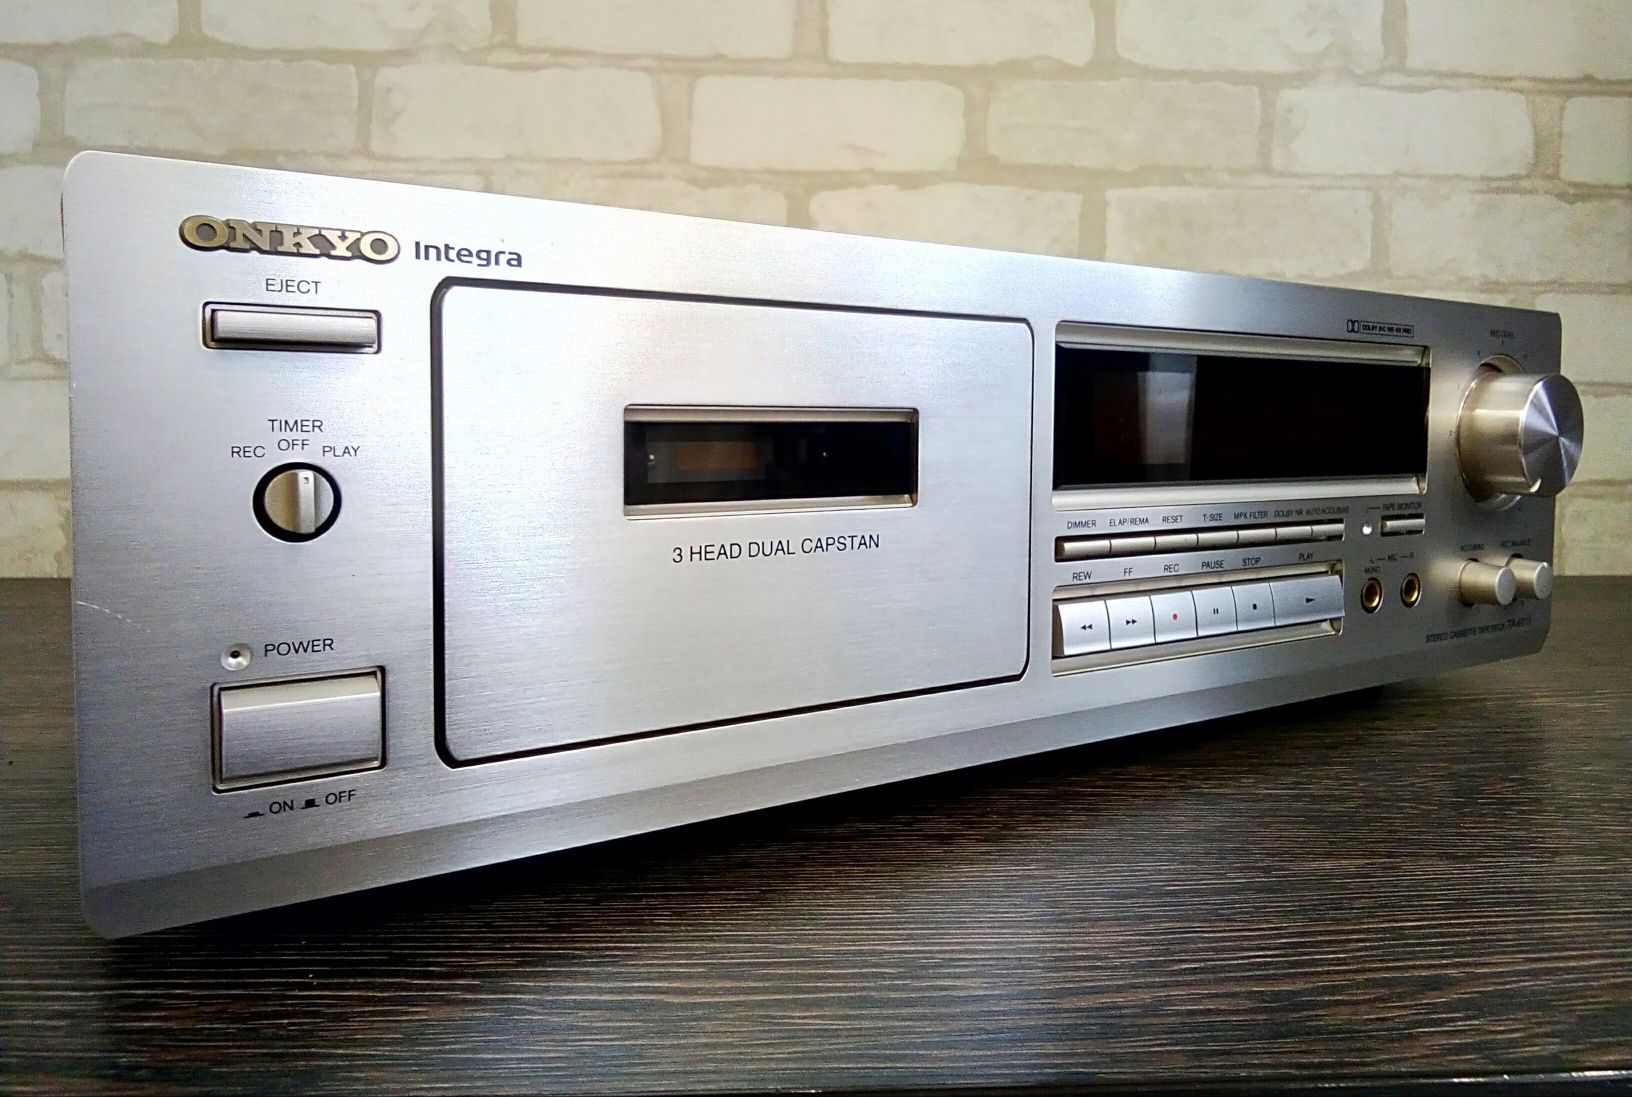 Onkyo Integra TA-6711 Stereo Cassette Tape Deck 1996-98